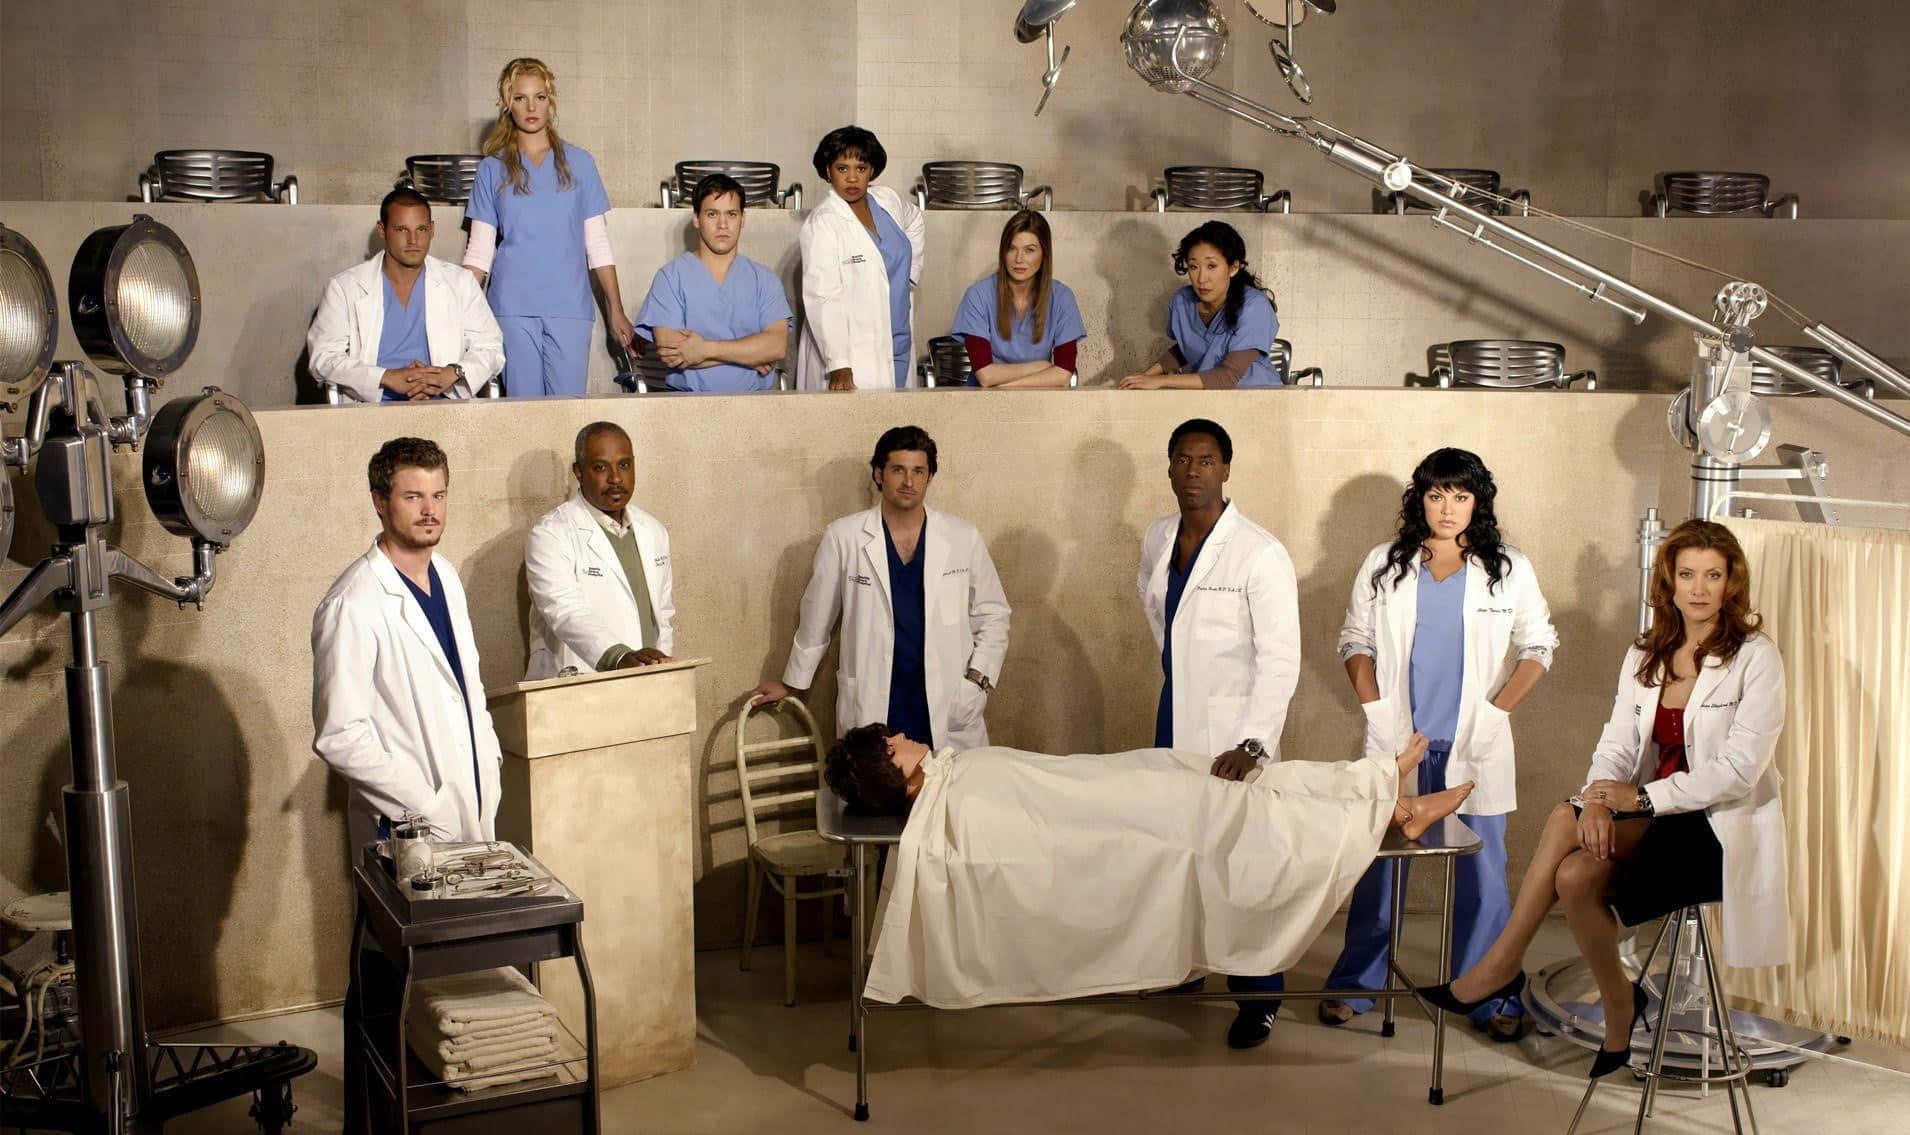 Celebrate the 15th season of Grey's Anatomy